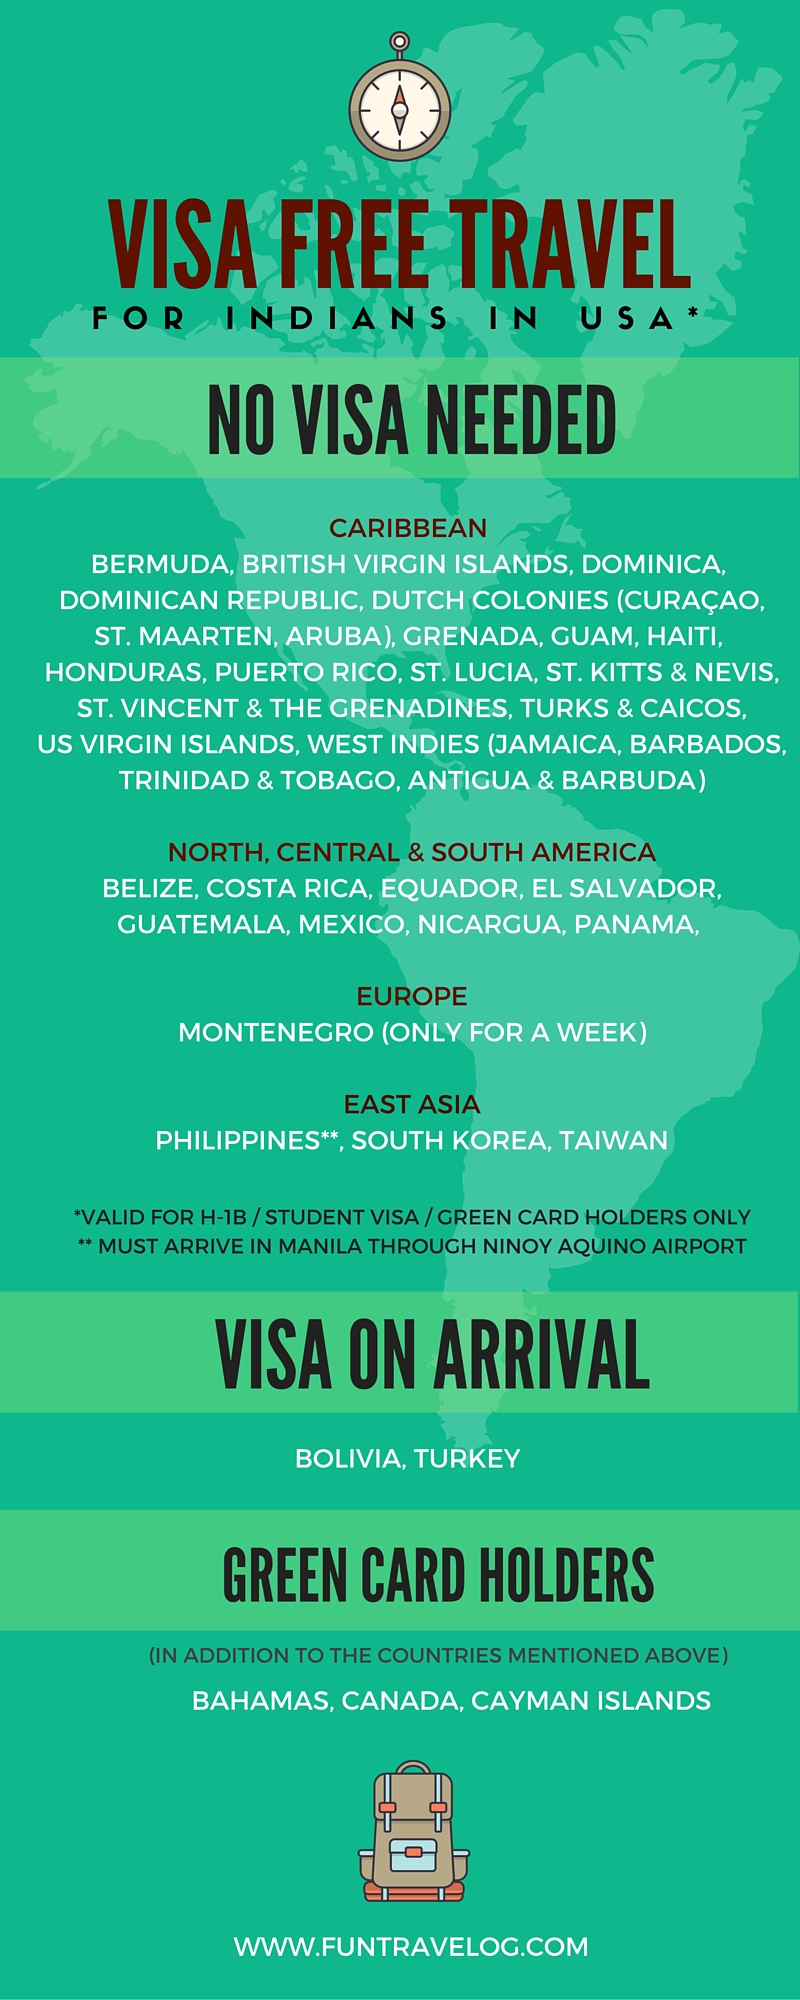 Visa Free Travel